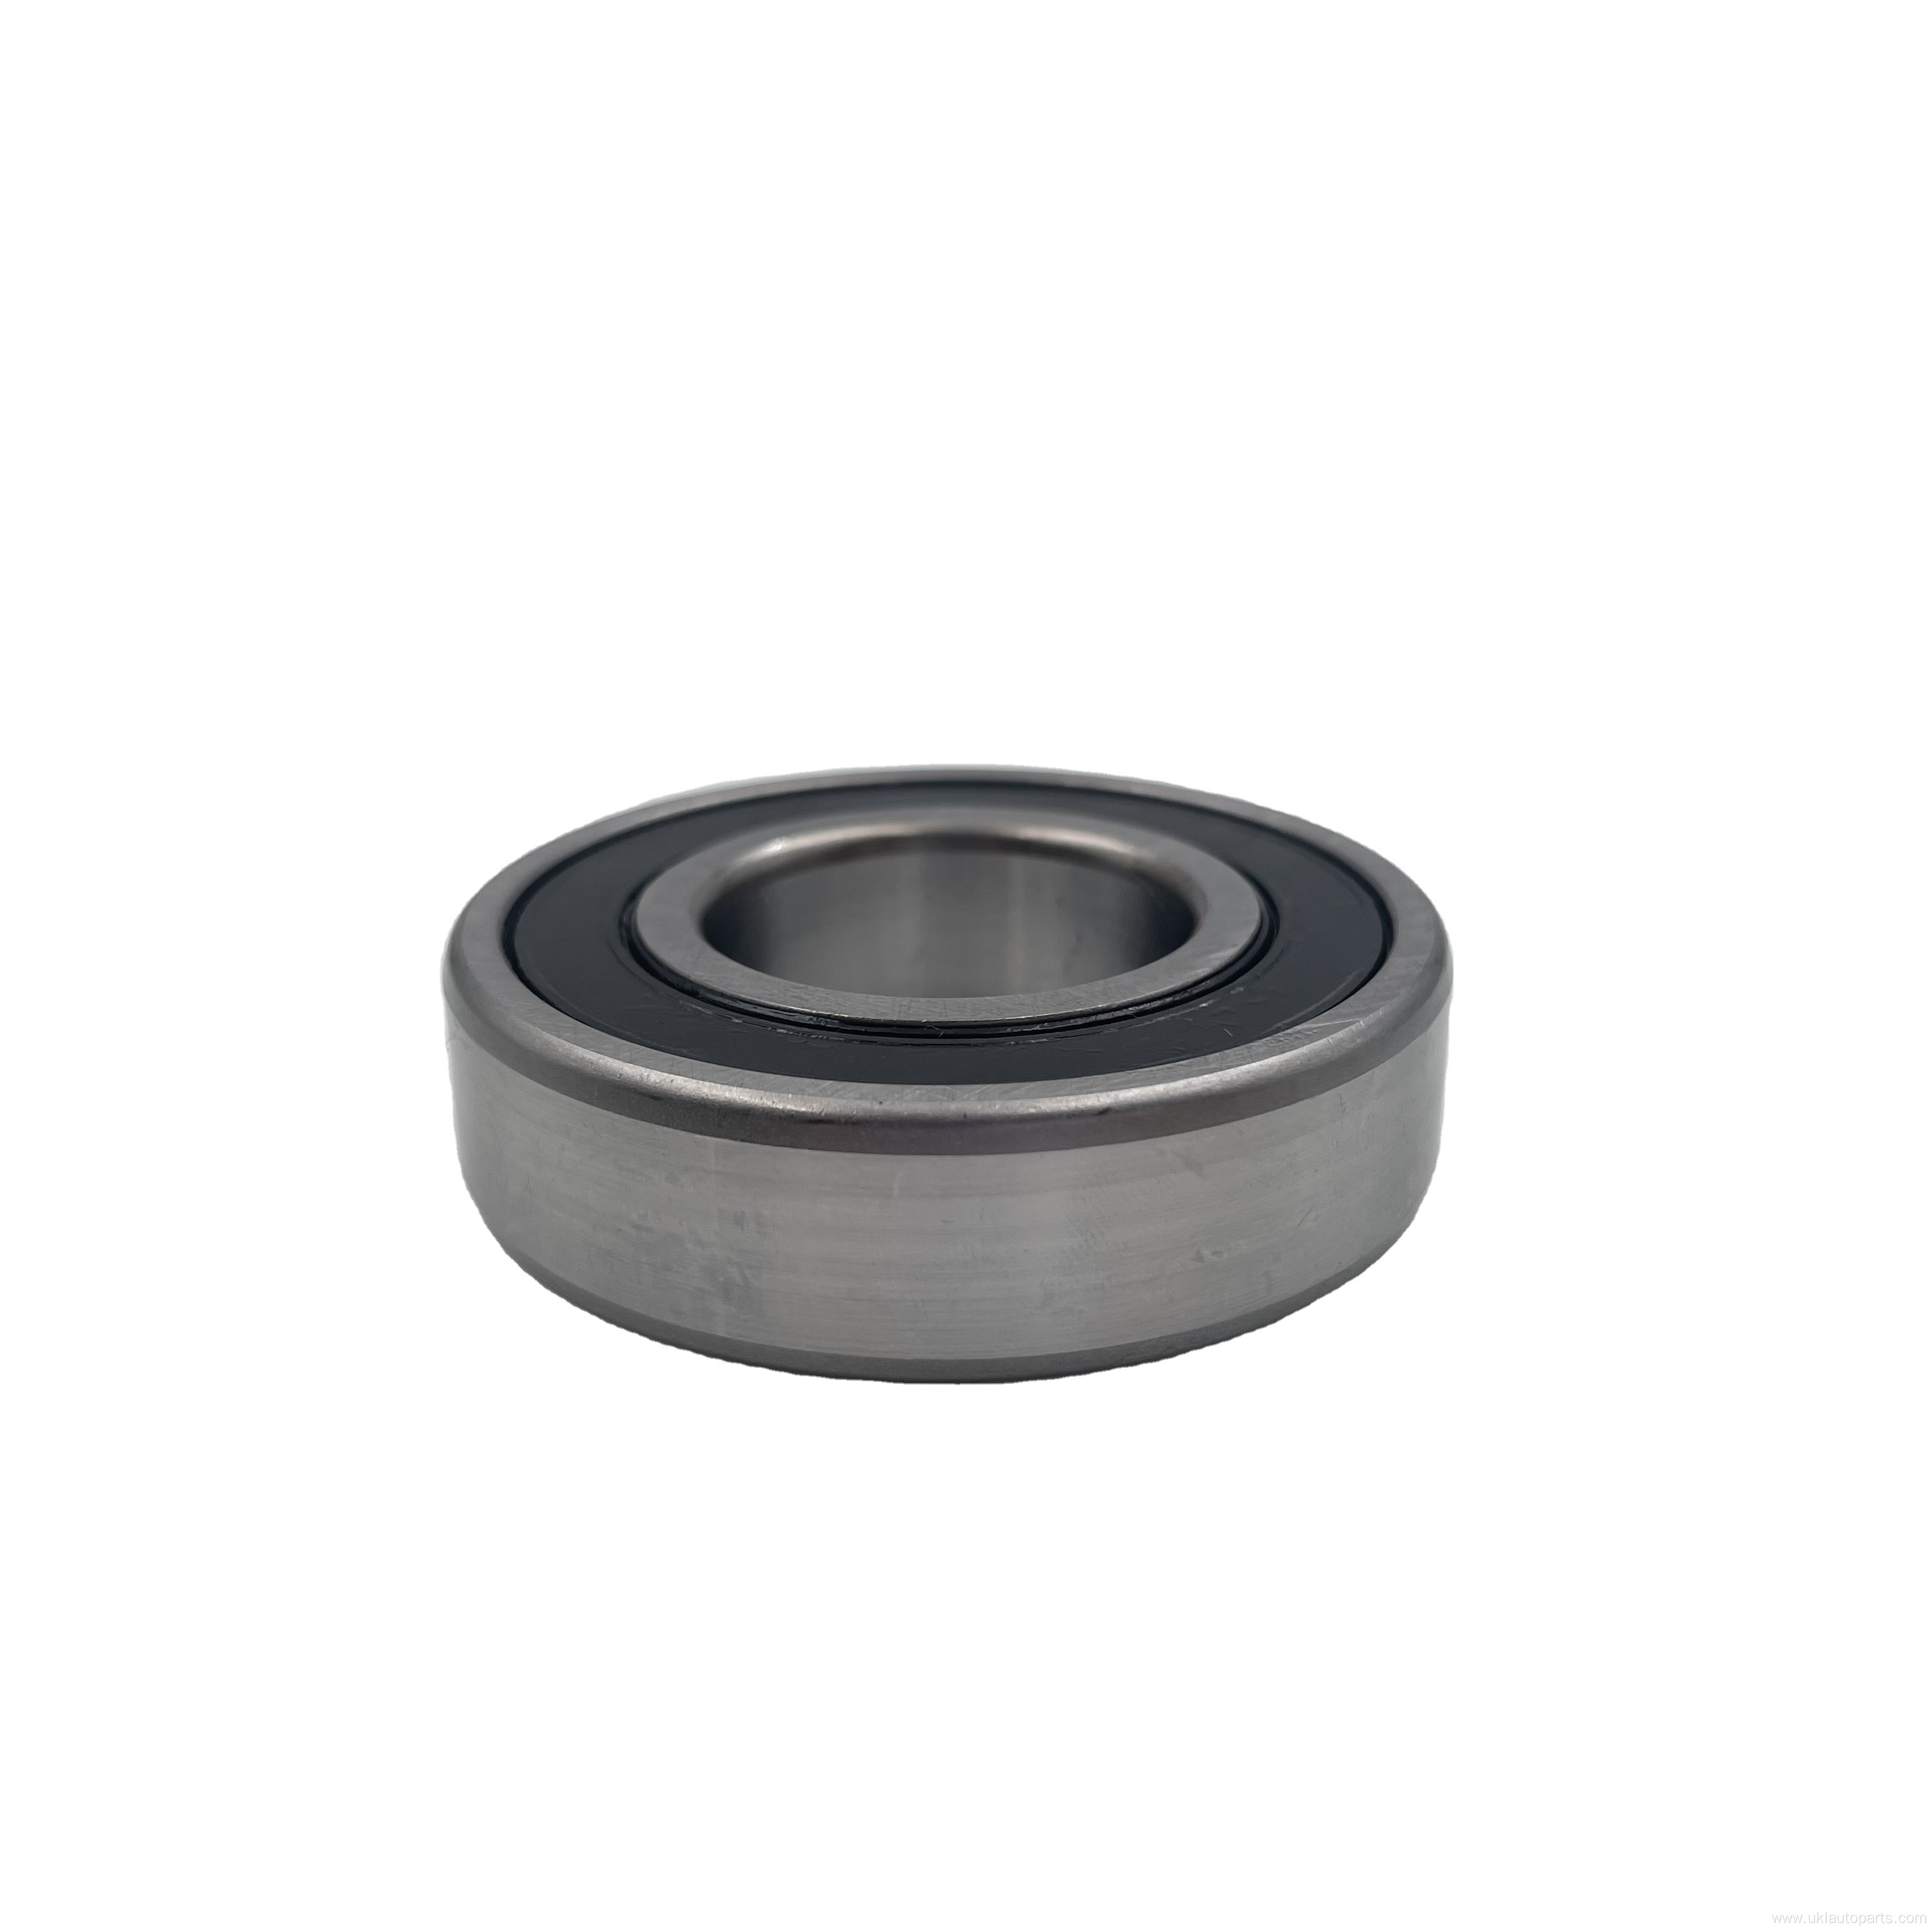 Hot sale 6206 2rs deep groove ball bearings